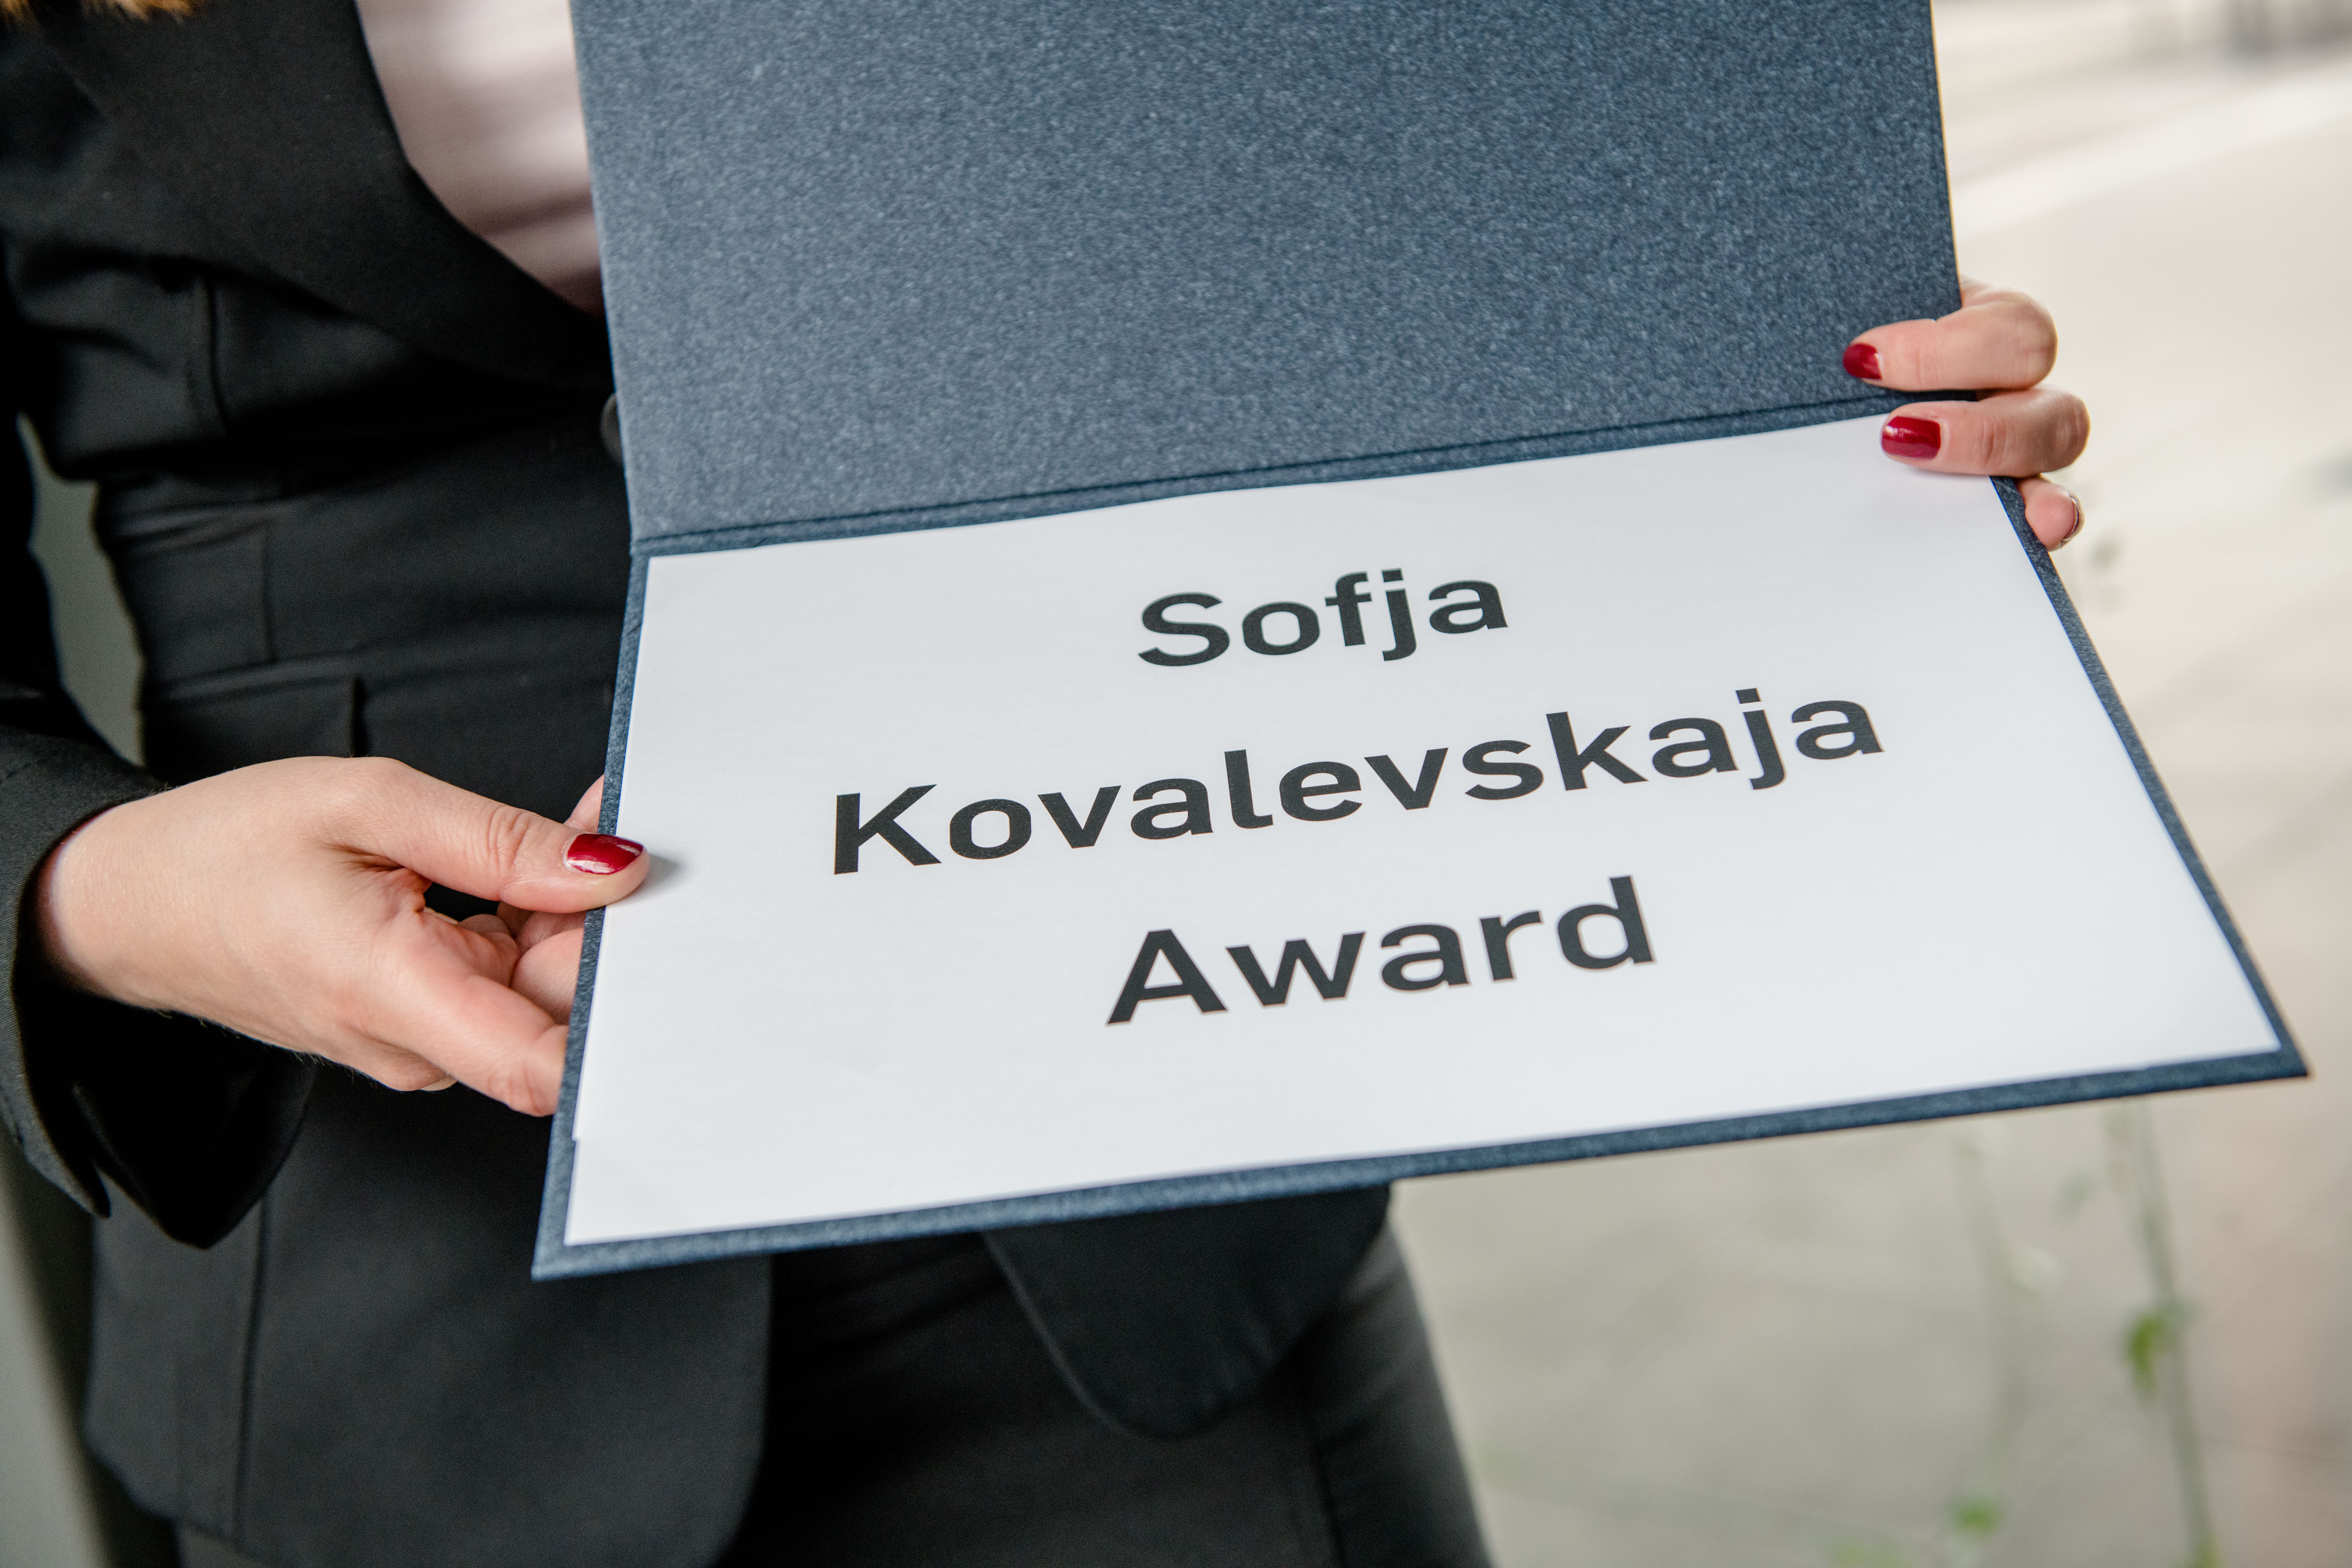 A folder with the inscription Sofja Kovalevskaja Award